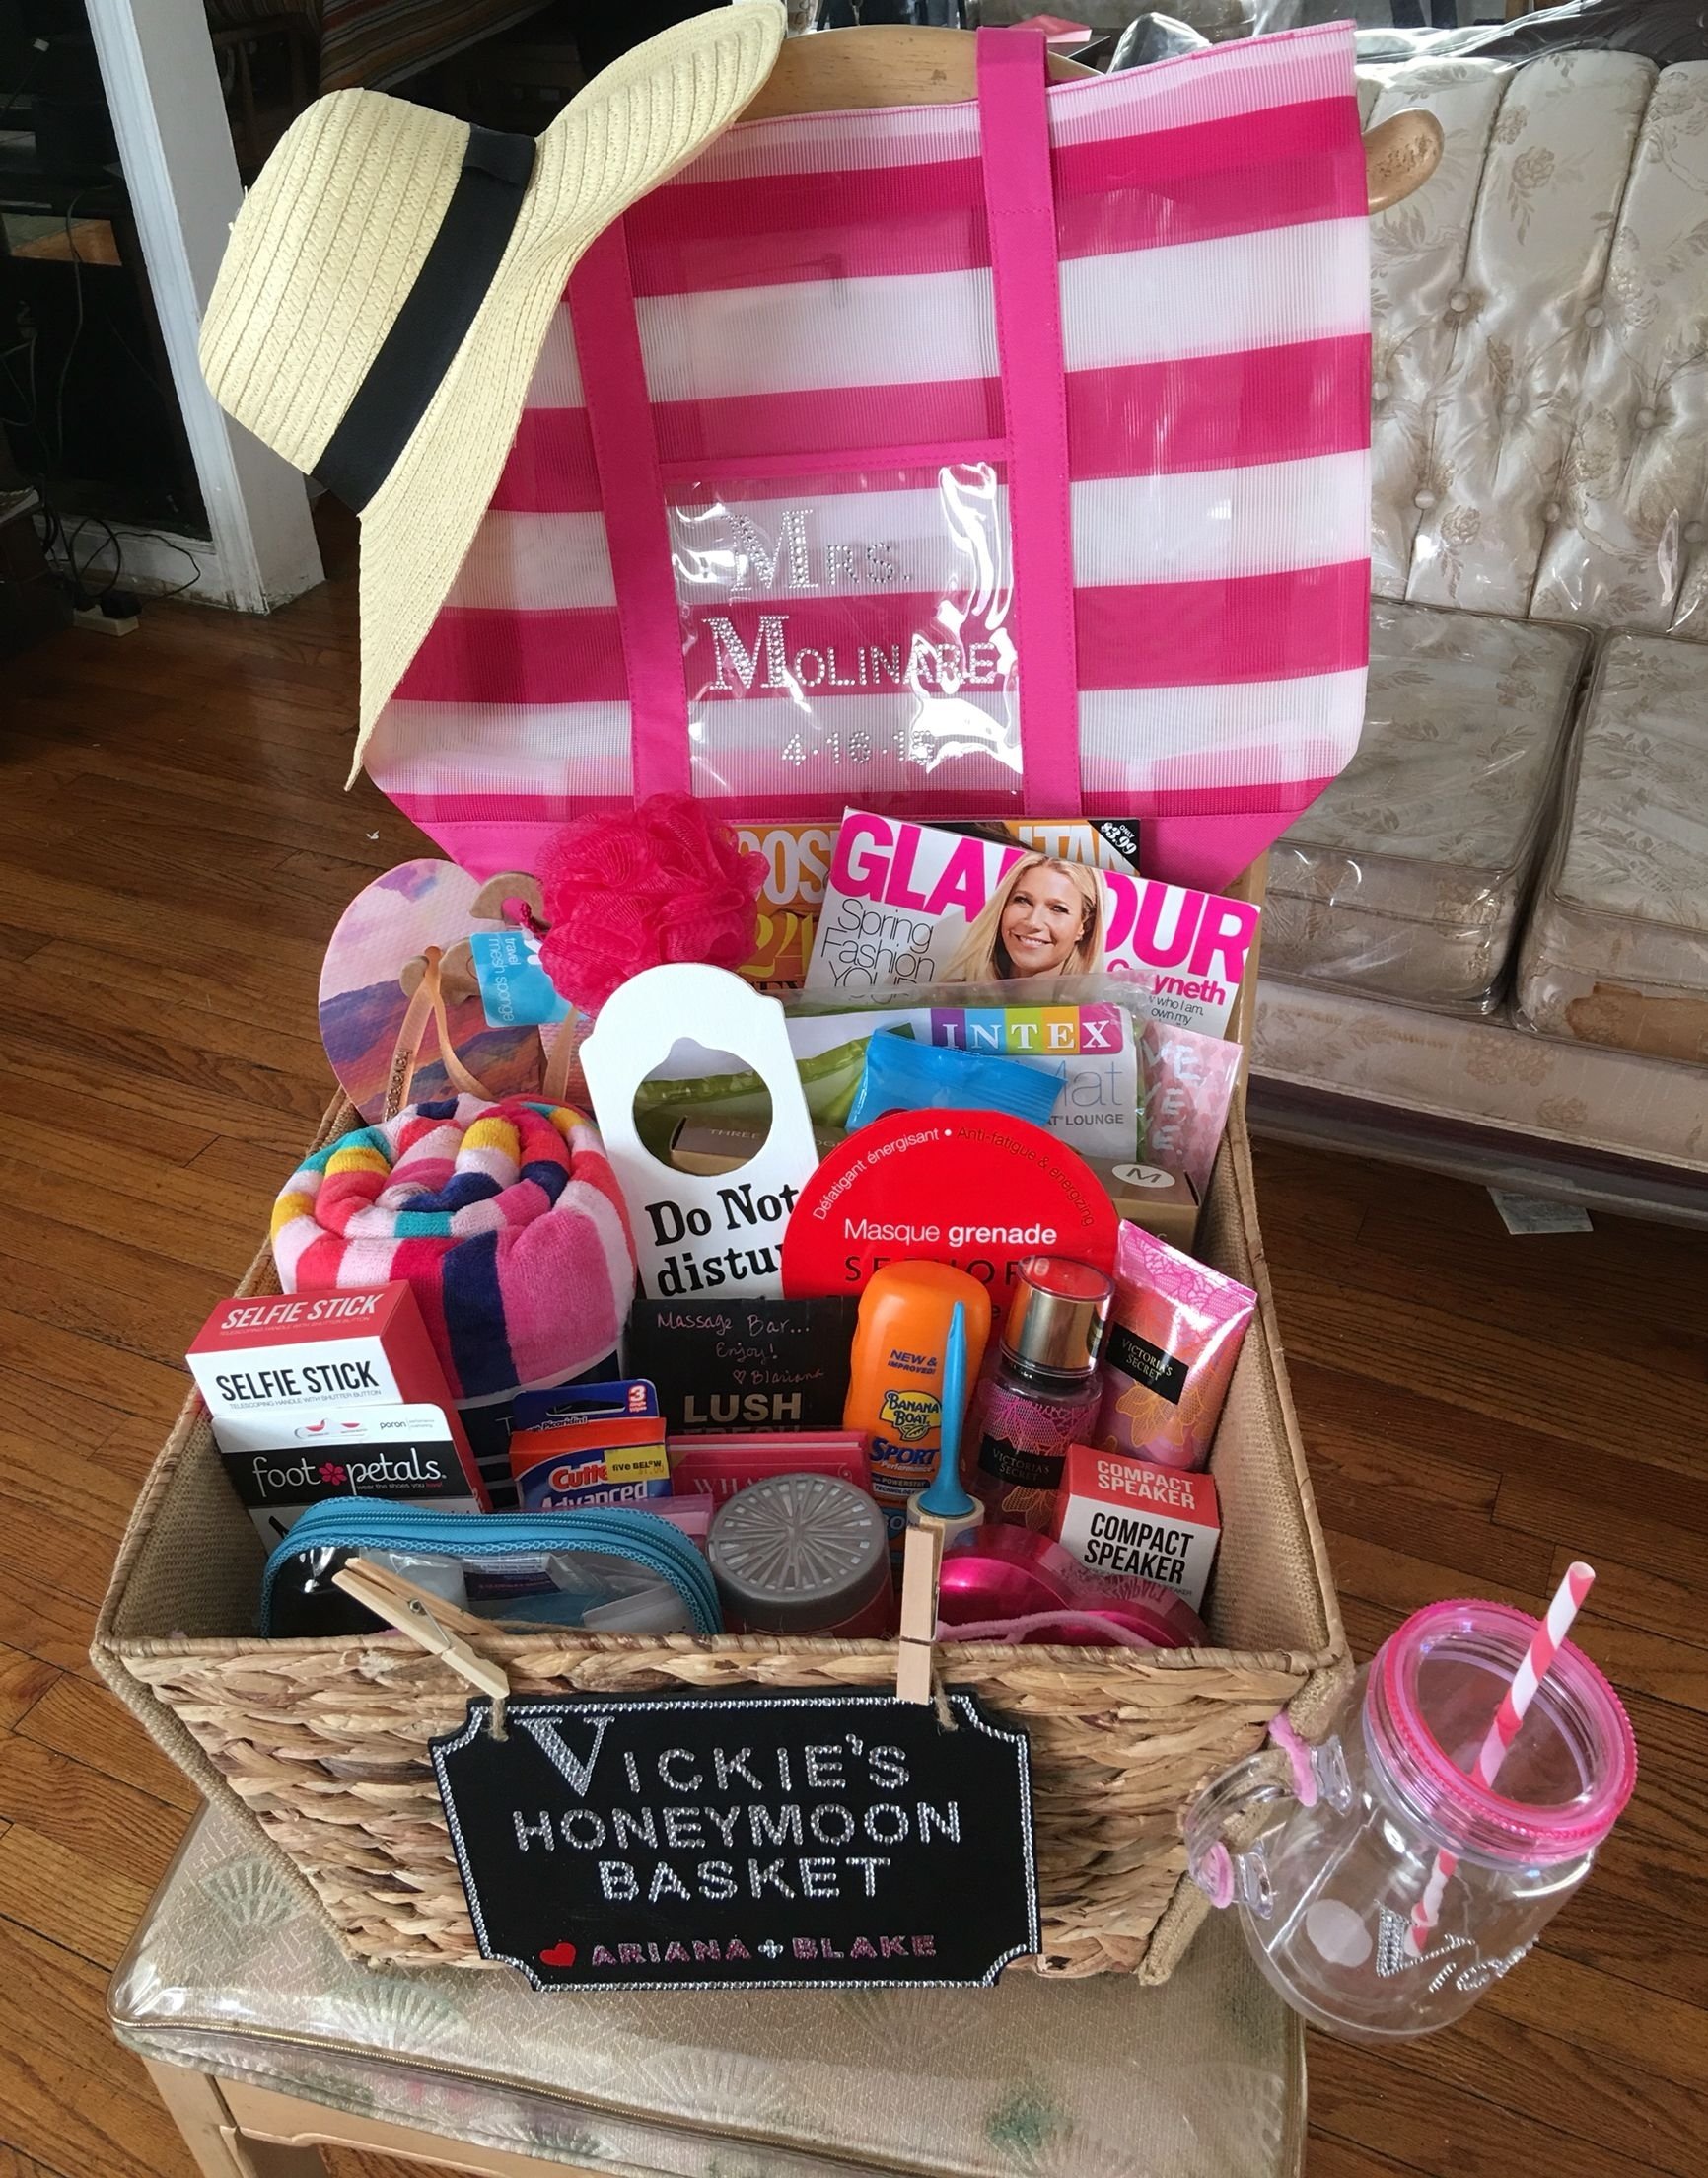 10 Stylish Bachelorette Party Gift Ideas For The Bride honeymoon gift basket gift ideas pinterest honeymoon gifts 3 2022